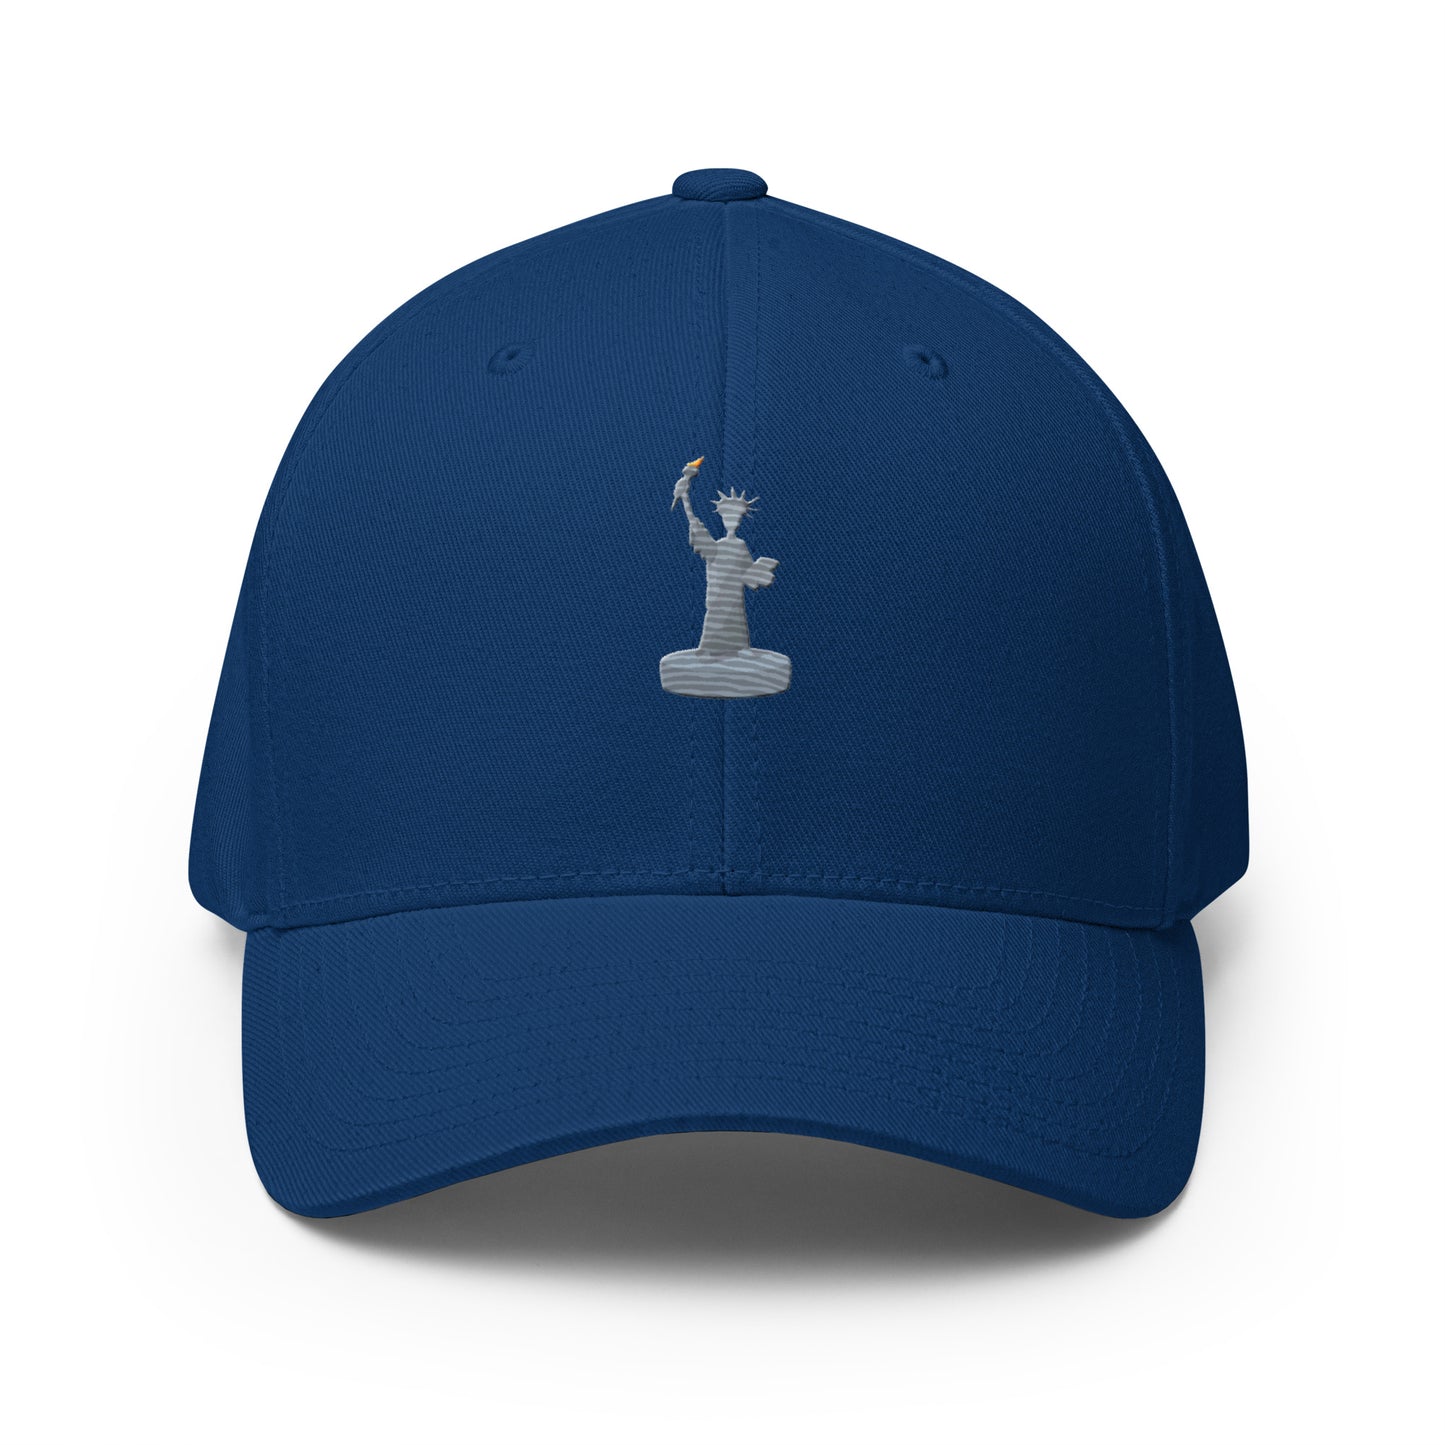 Baseball Cap with Statue of Liberty Symbol